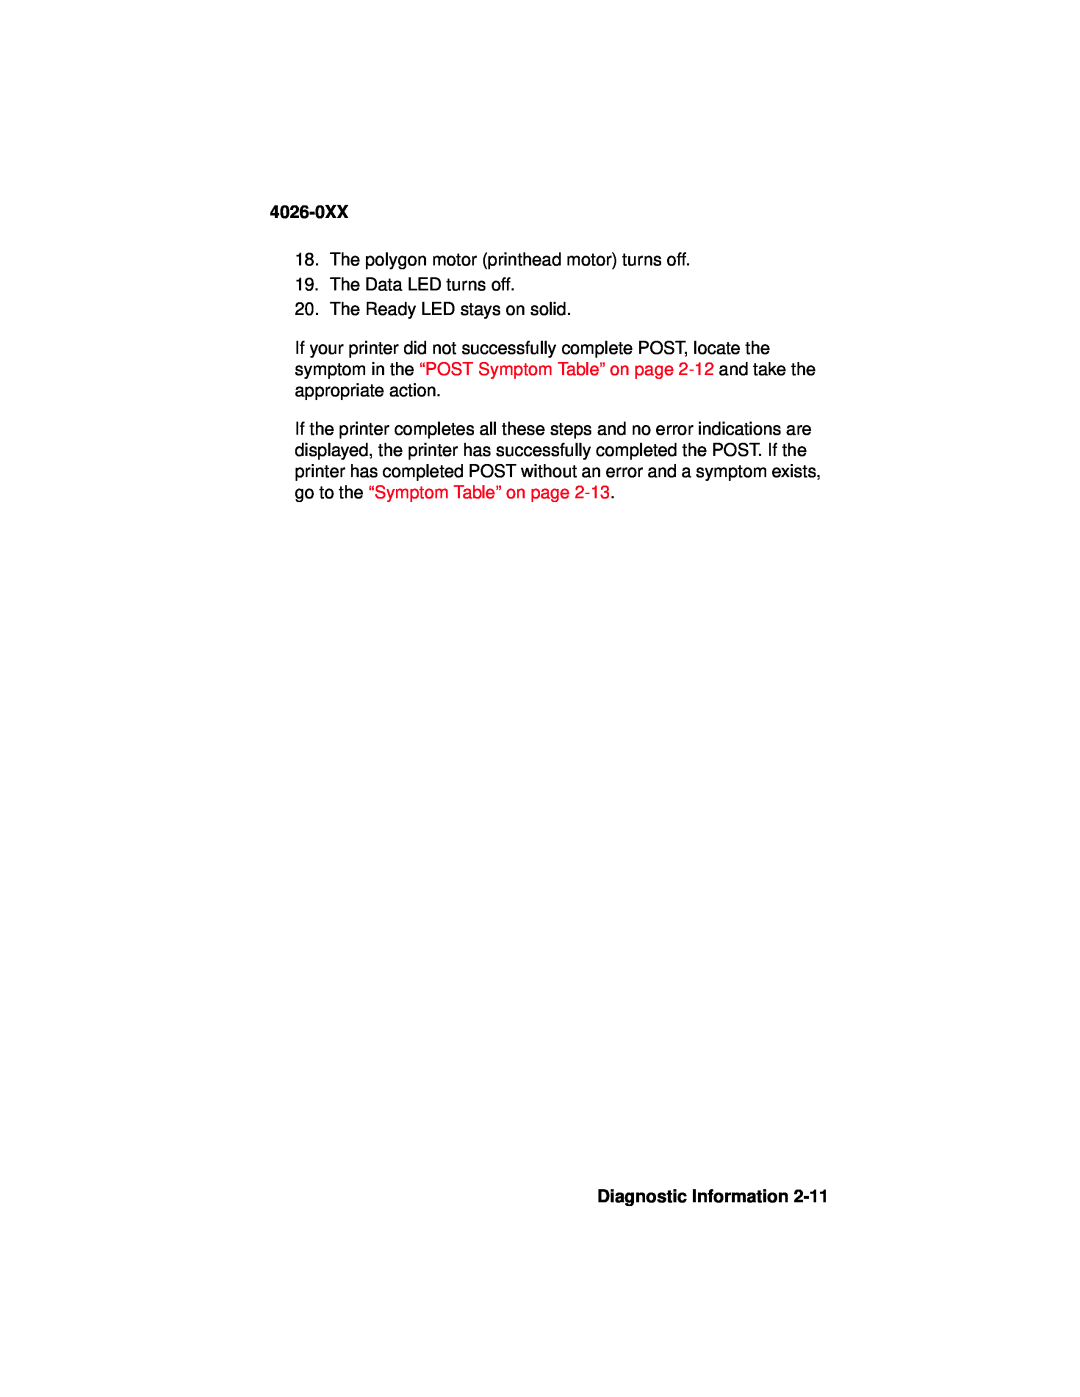 Lexmark OptraTM manual 4026-0XX, The polygon motor printhead motor turns off, Diagnostic Information 